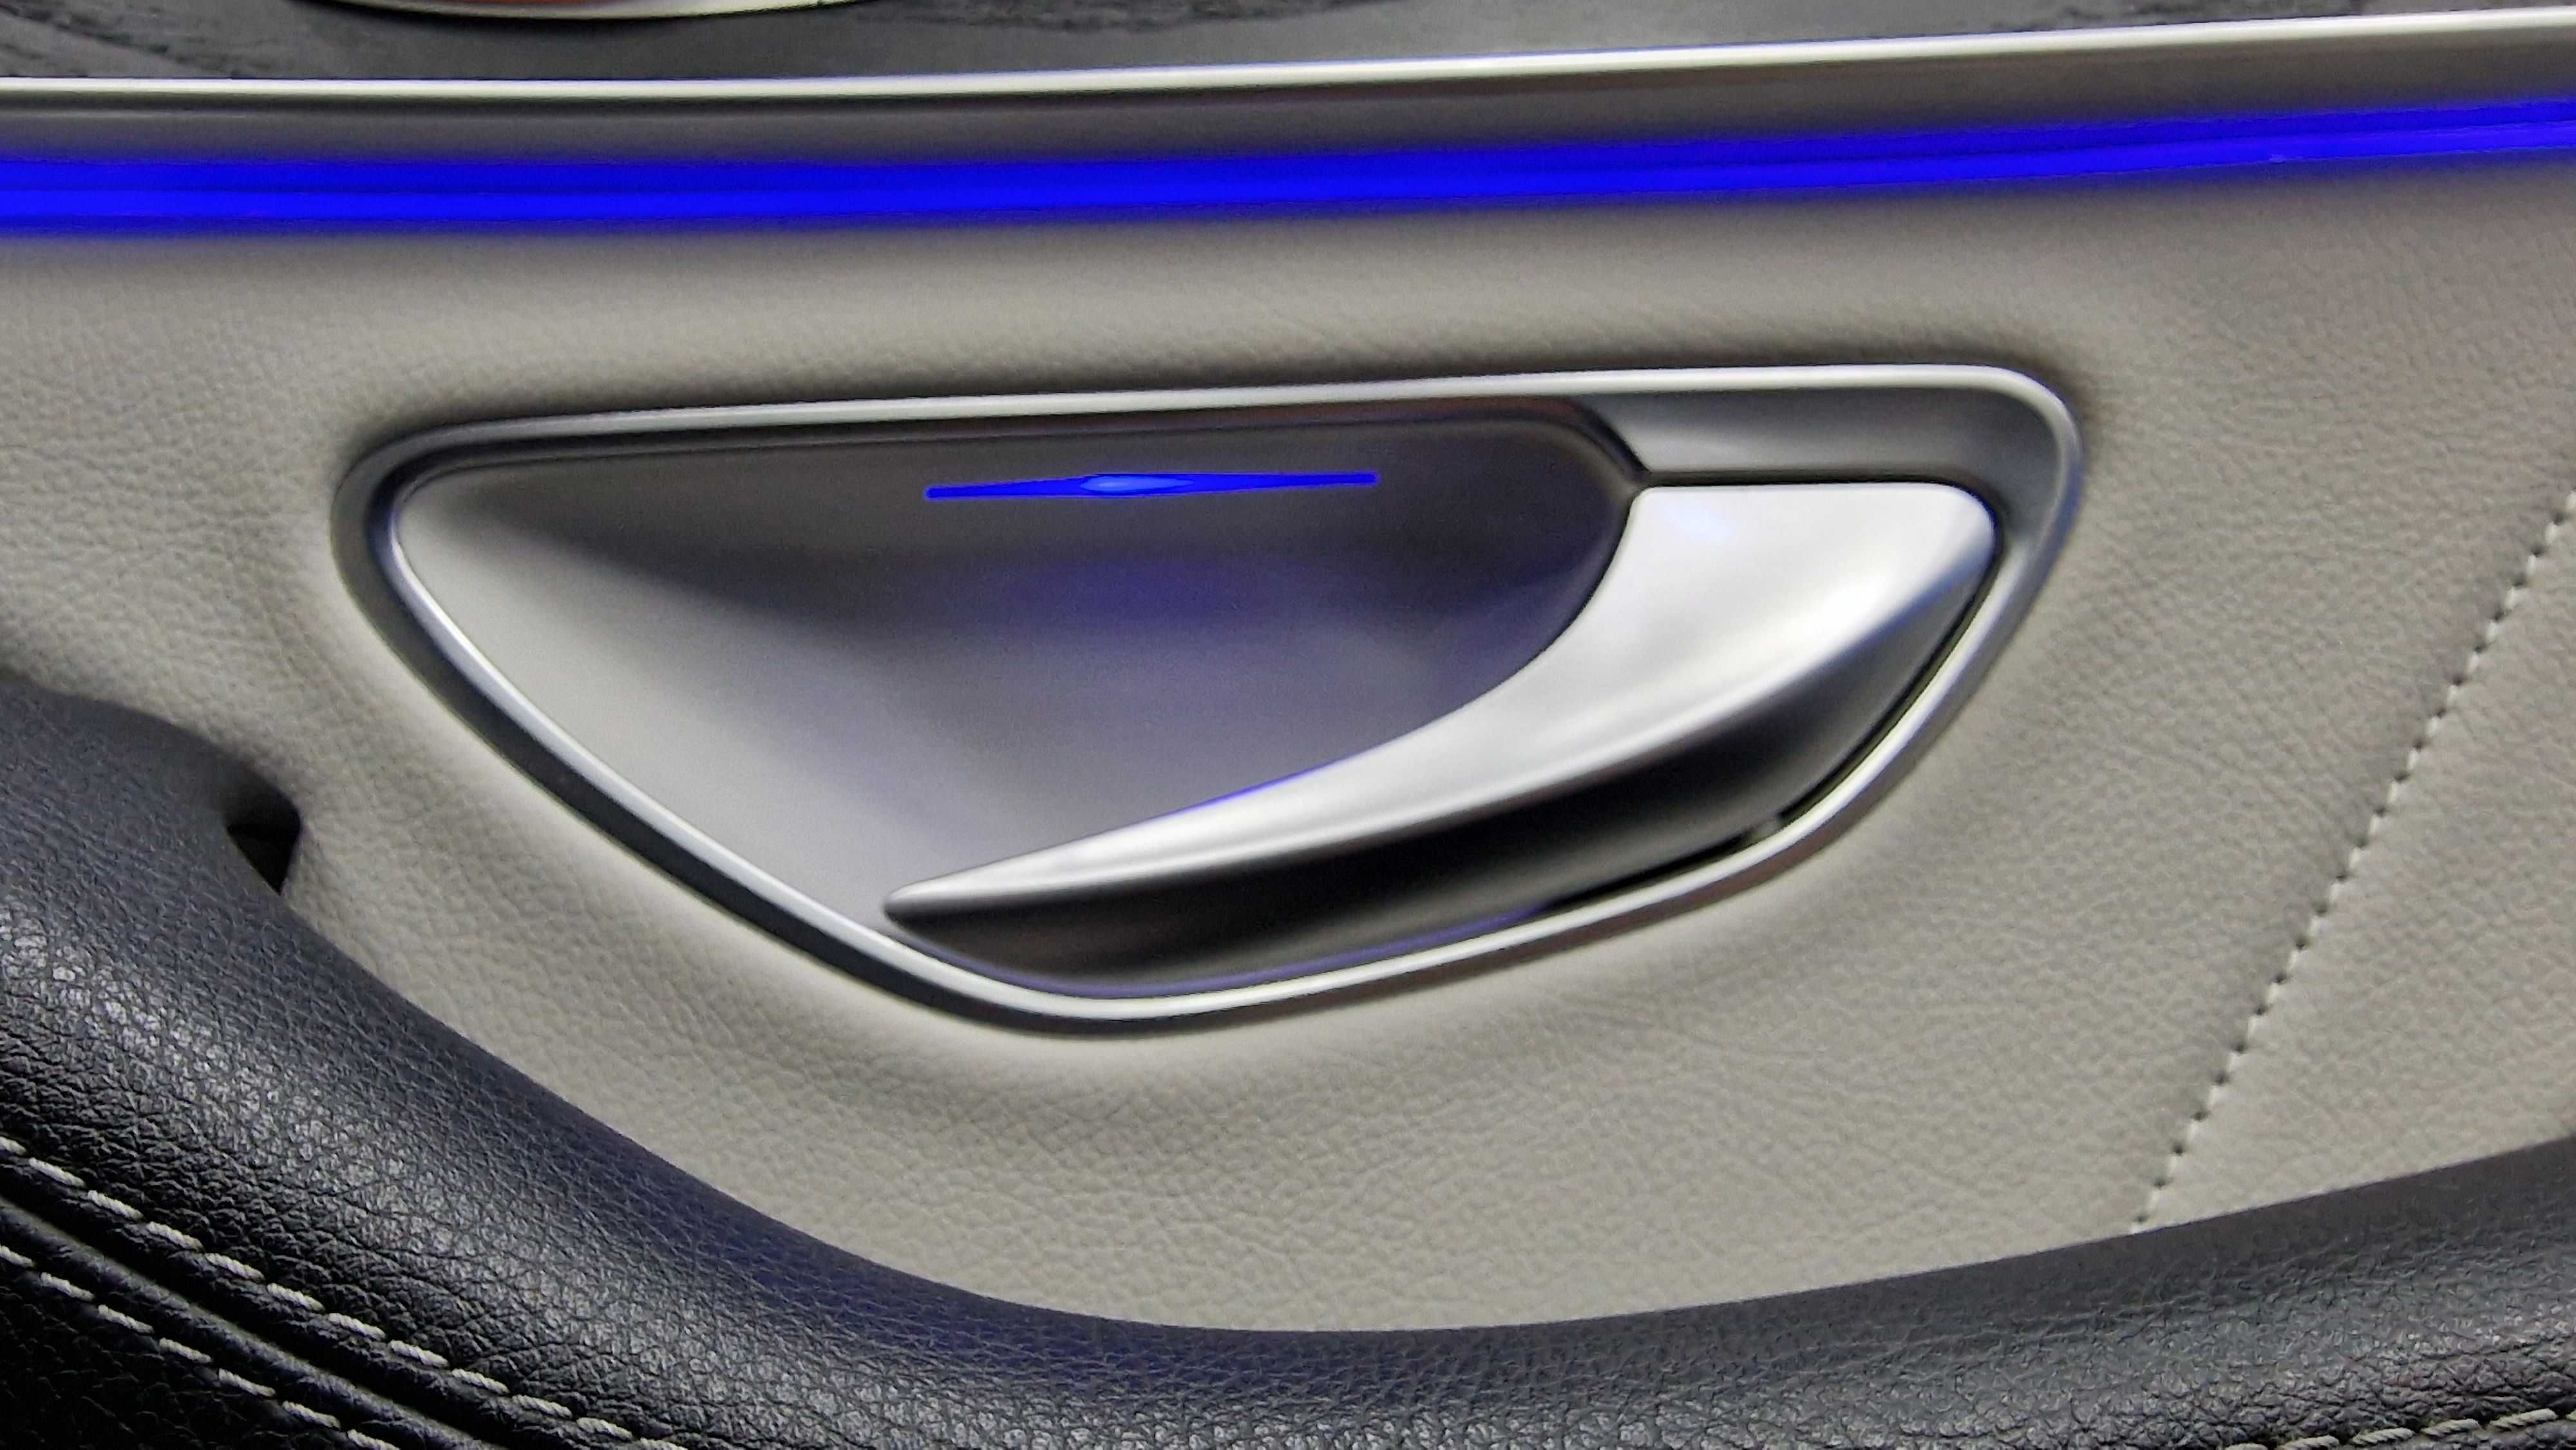 Iluminare ambientala Mercedes - lumini acrilice ambientale